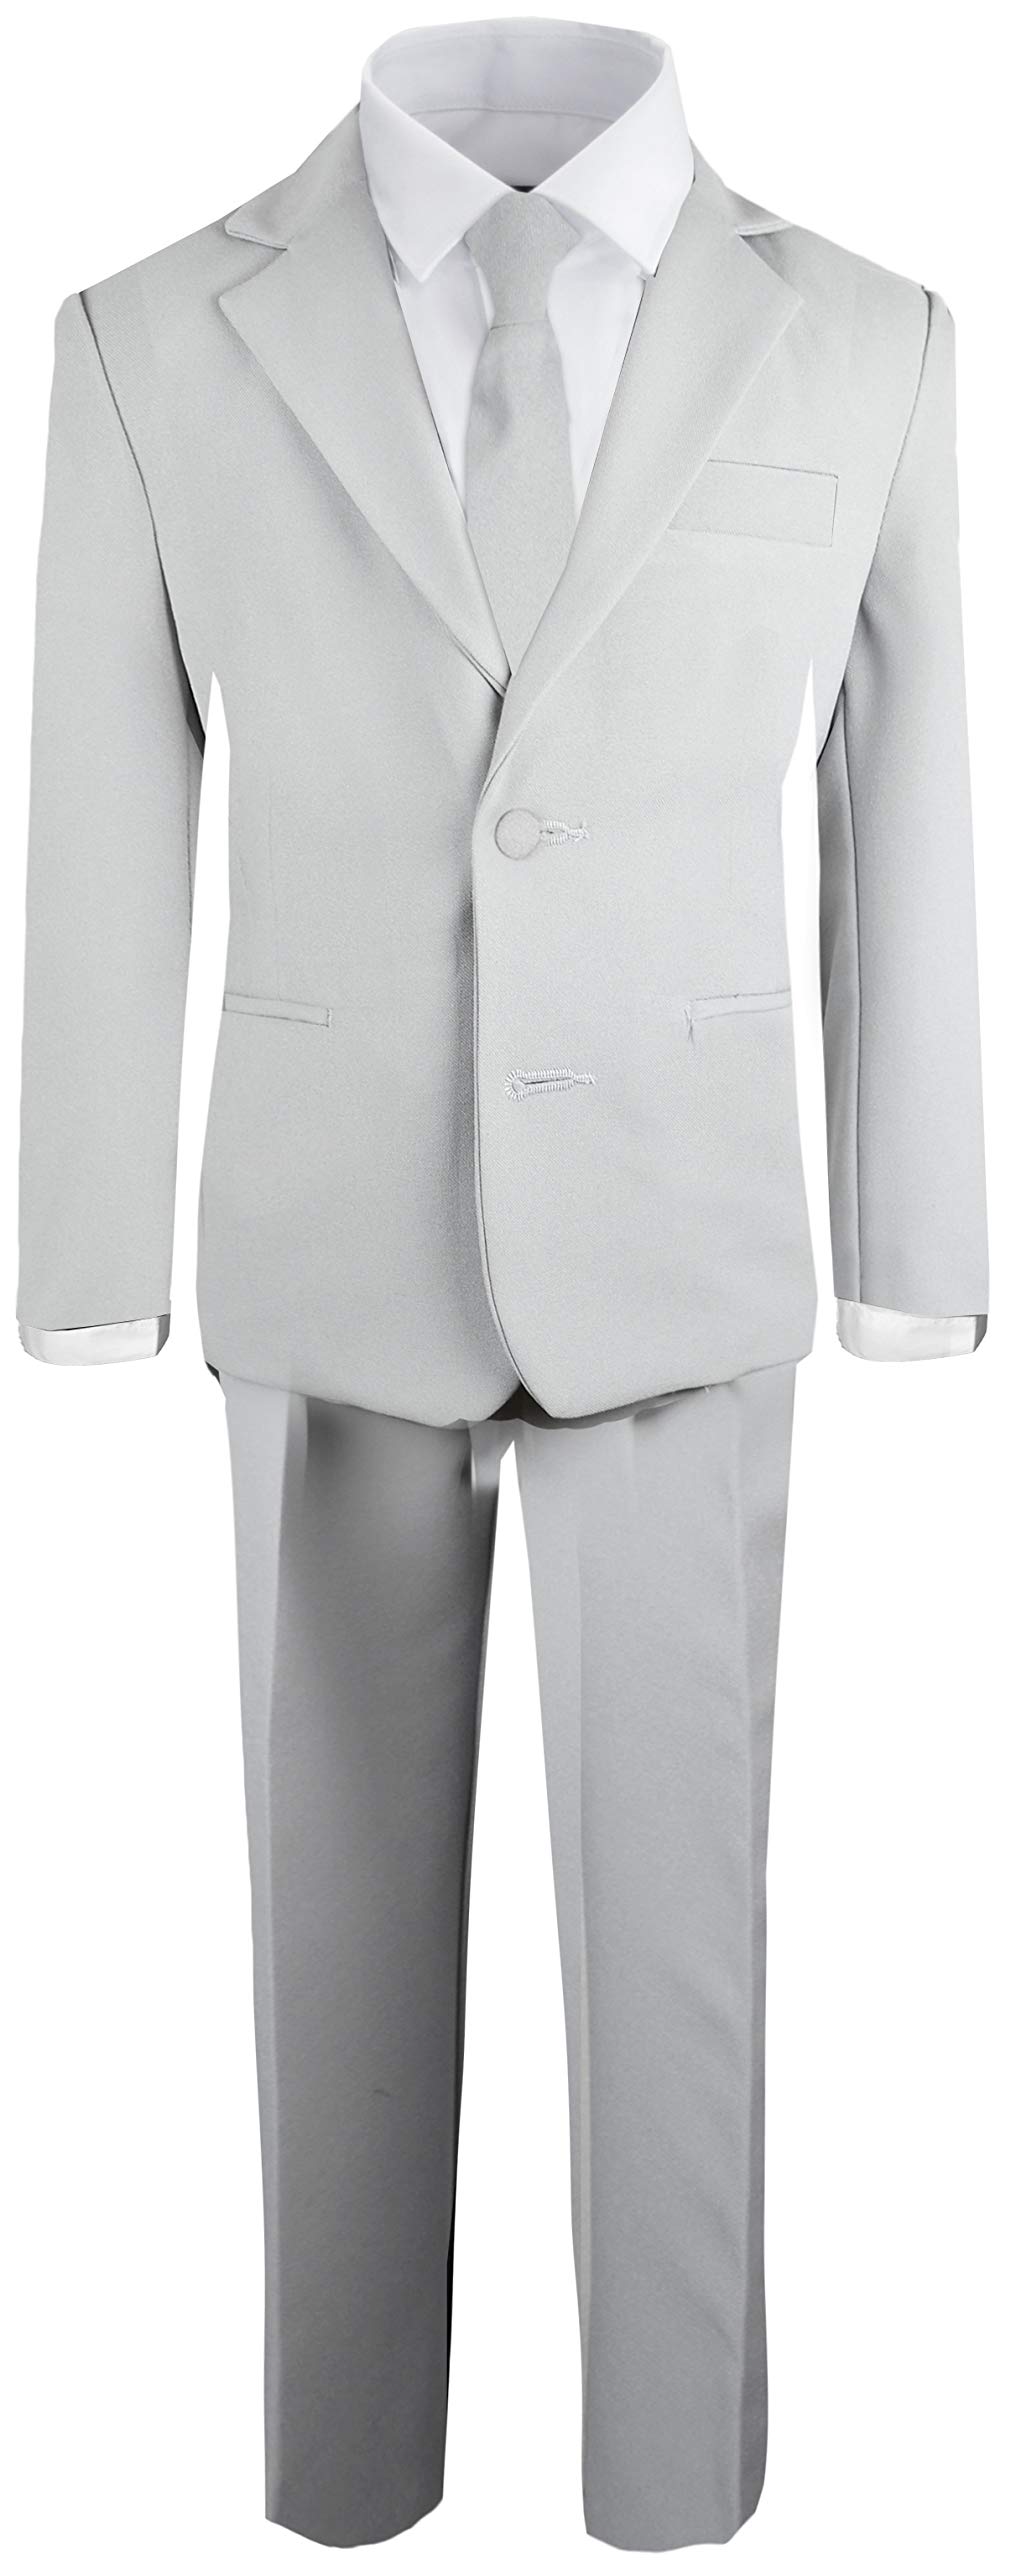 Black n Bianco Boys Formal Black Suit with Shirt and Vest (2T, grey)